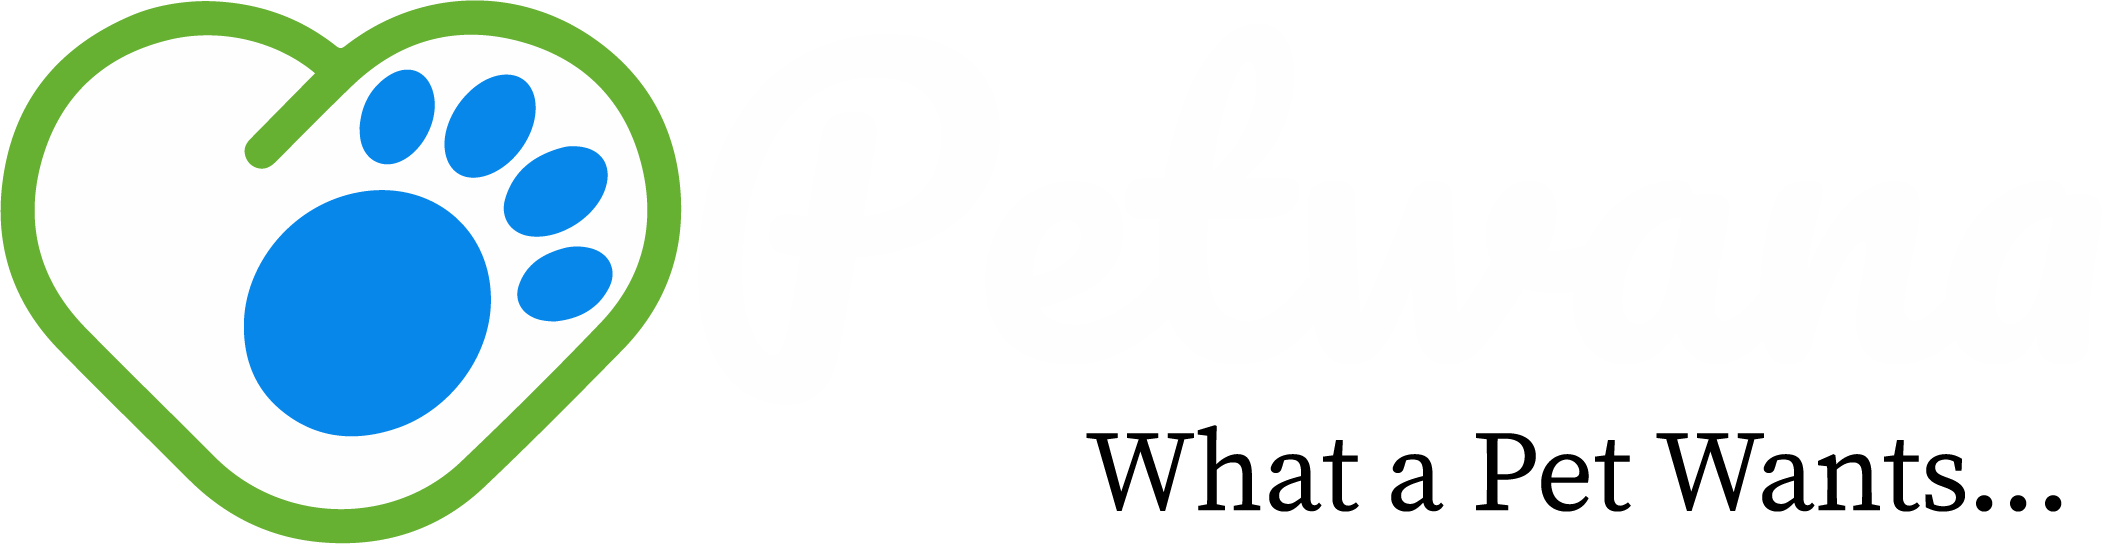 Petwana